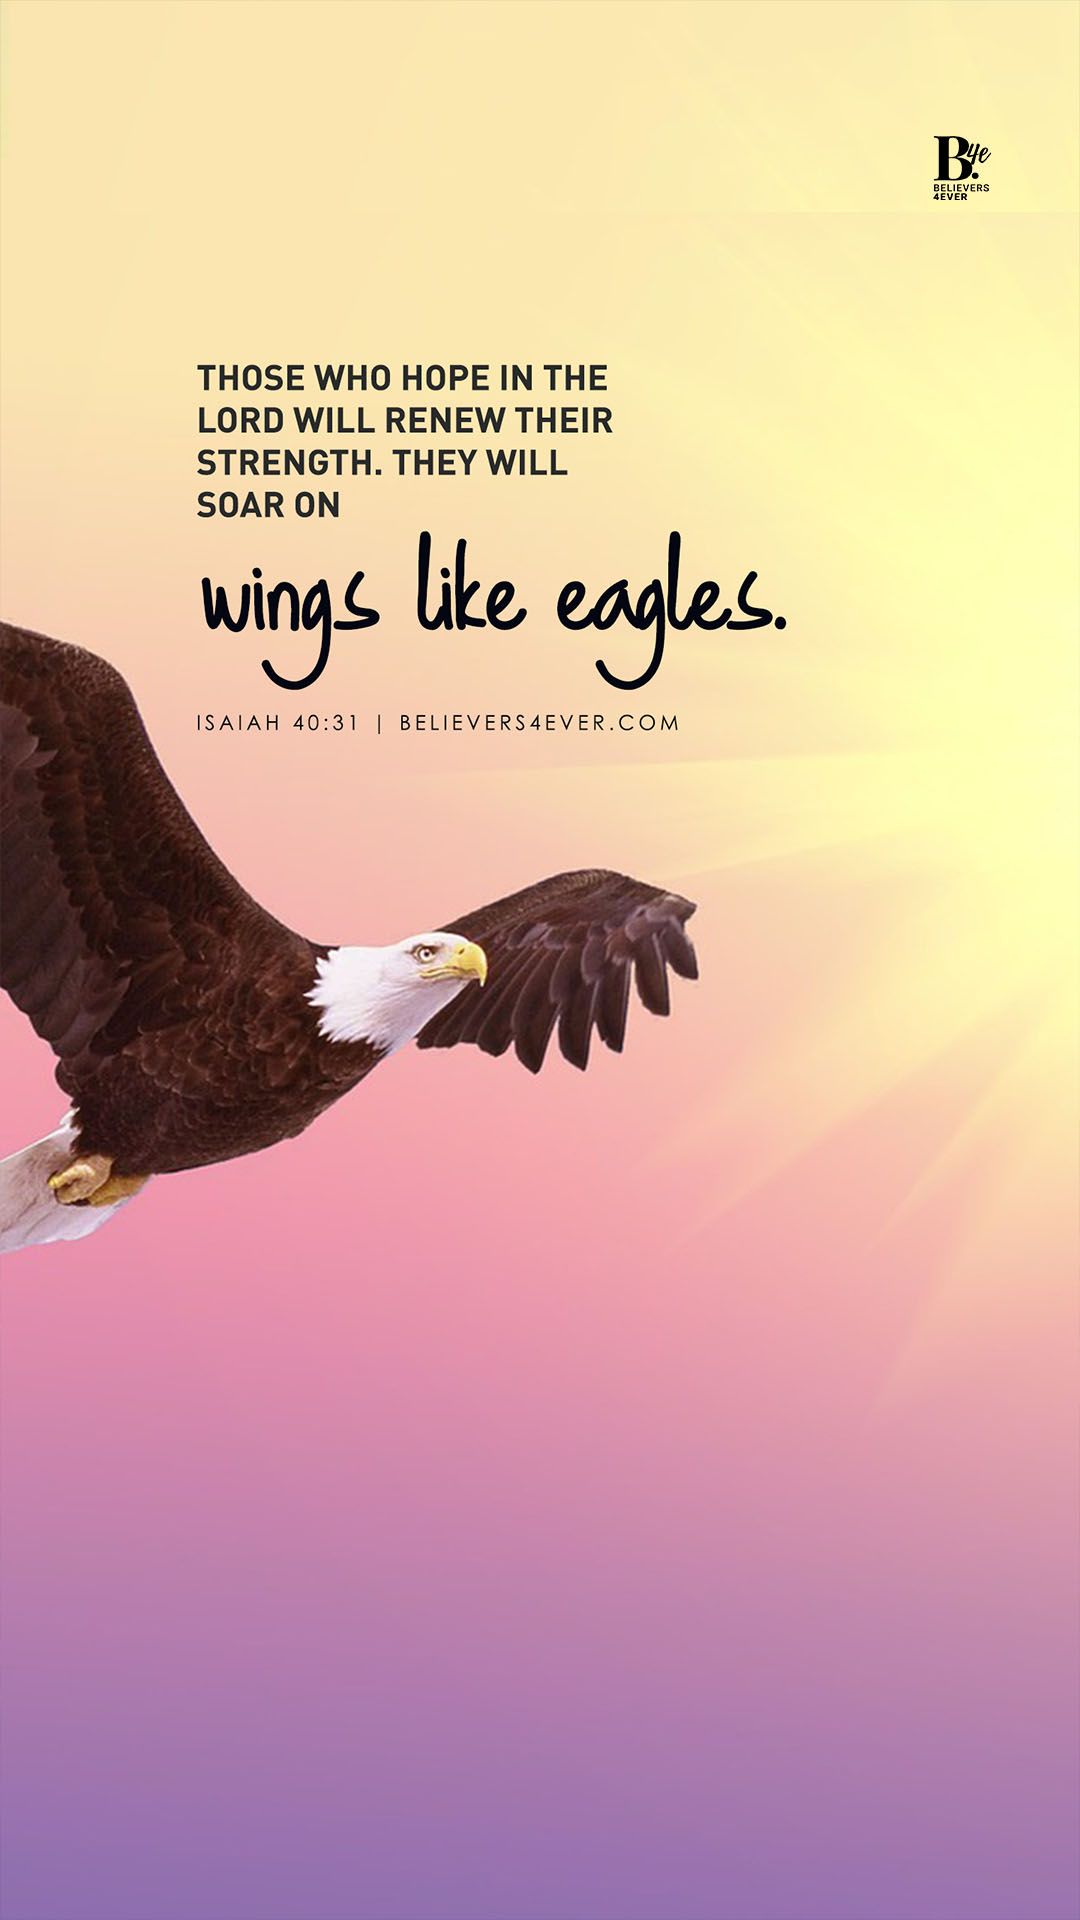 Wings like Eagles